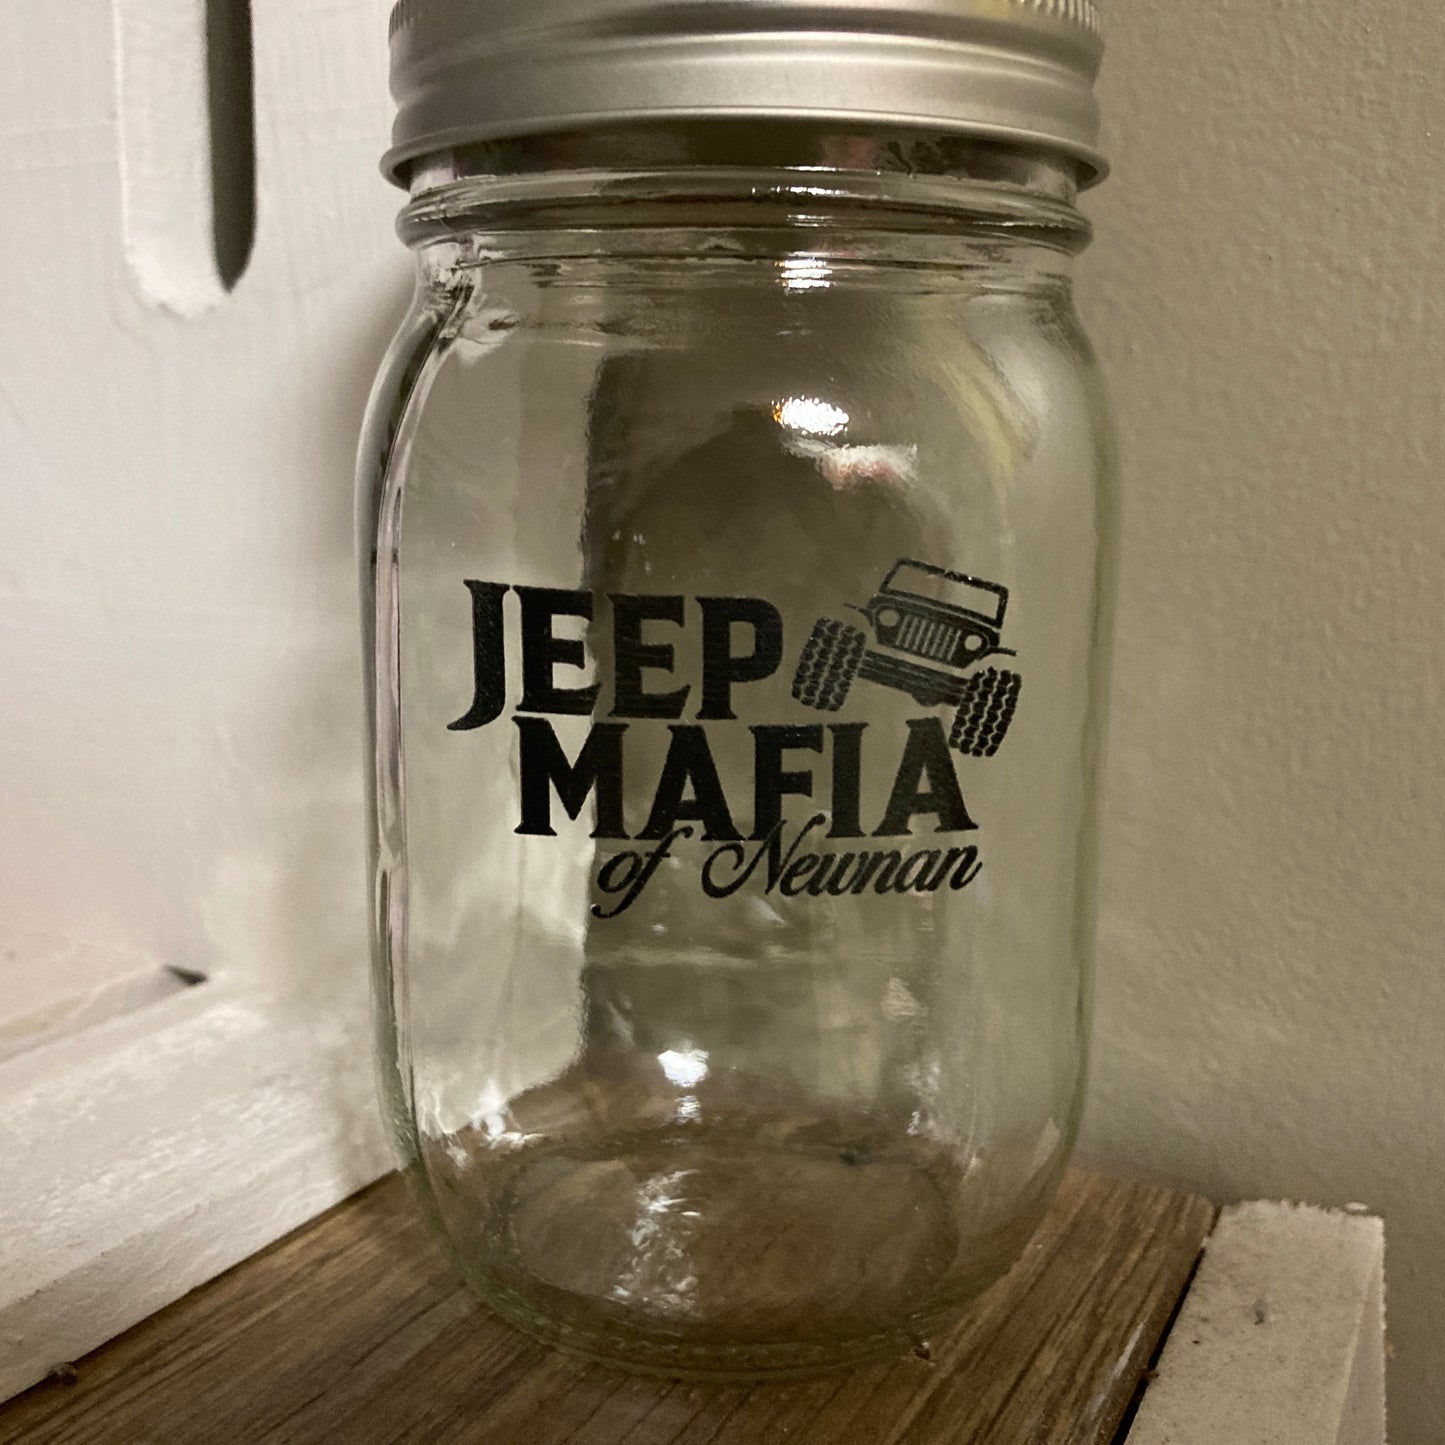 16 oz Ball Jar with Jeep Mafia of Newnan Engraved